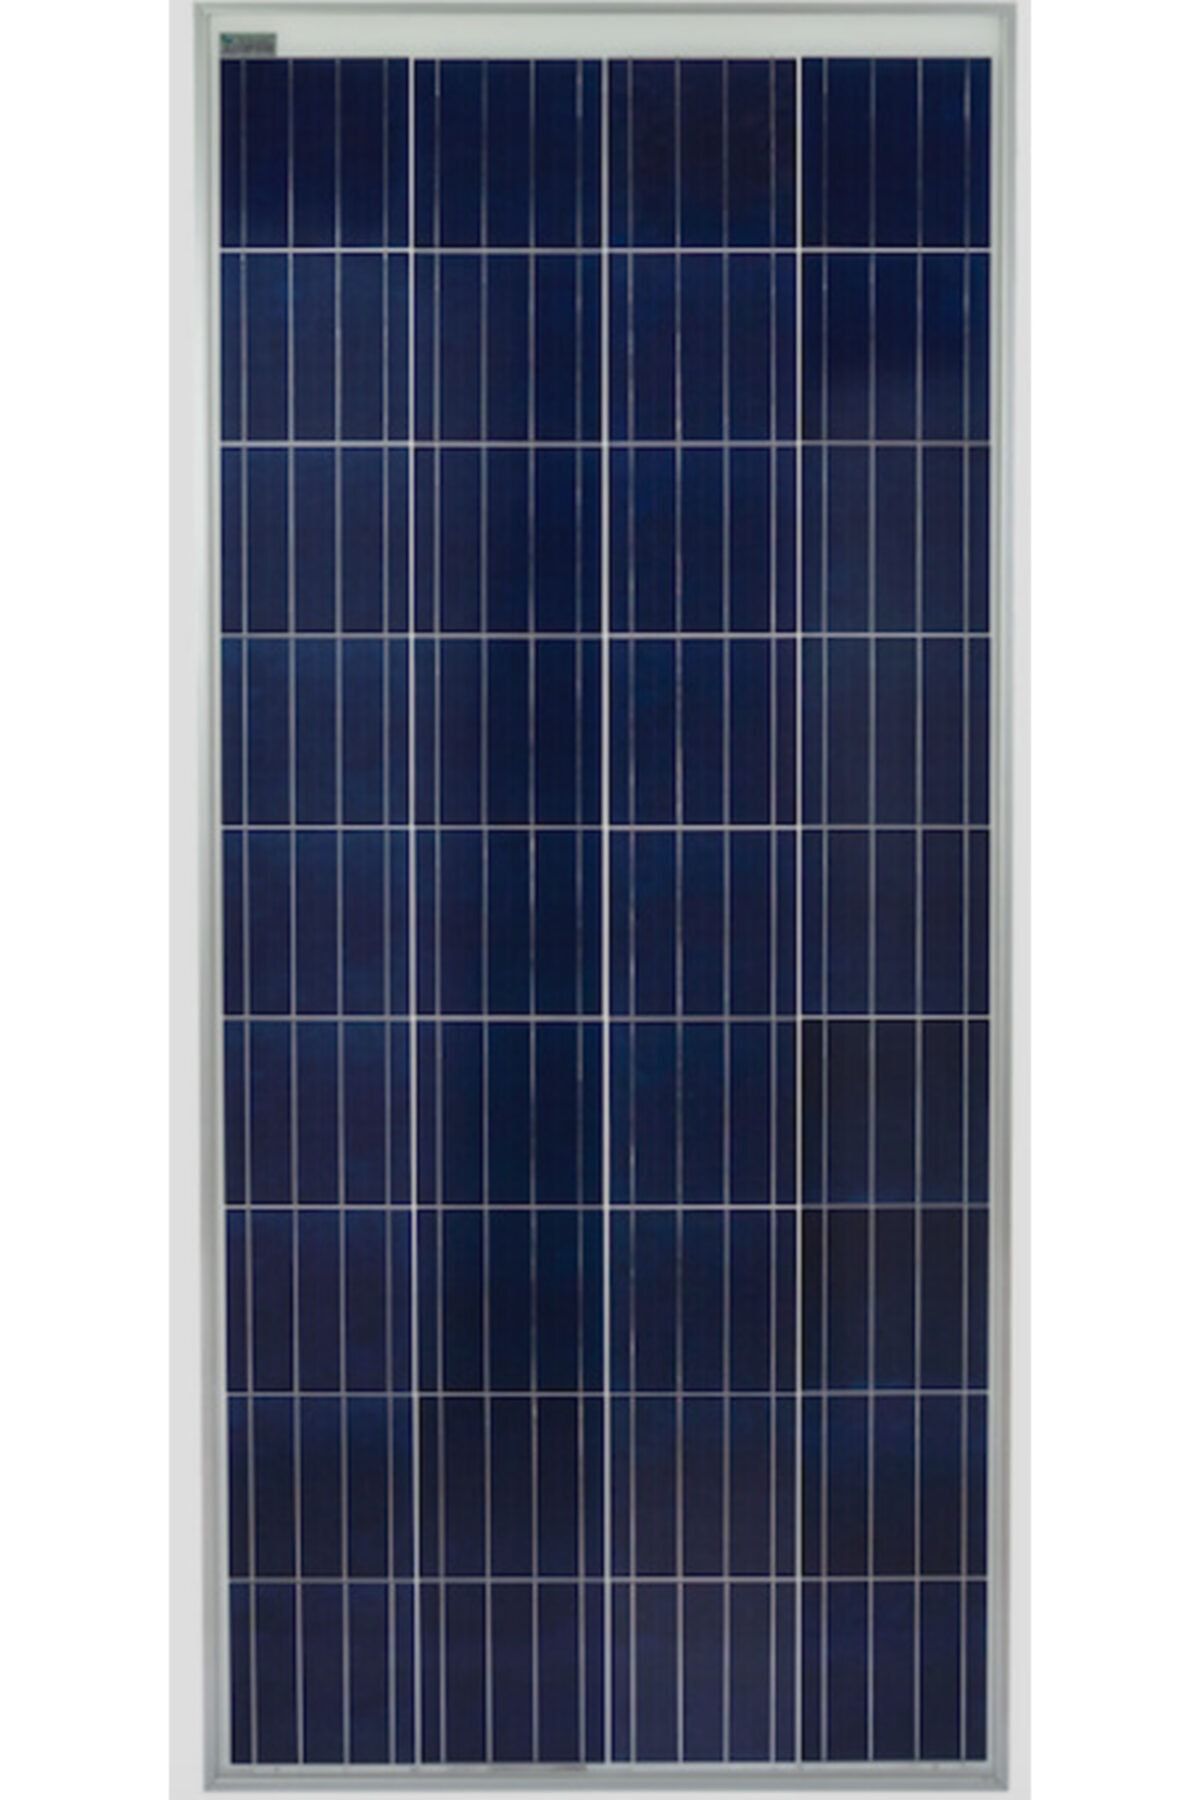 Gesper Enerji Polikristal Güneş Paneli Gesper 170-175 Watt